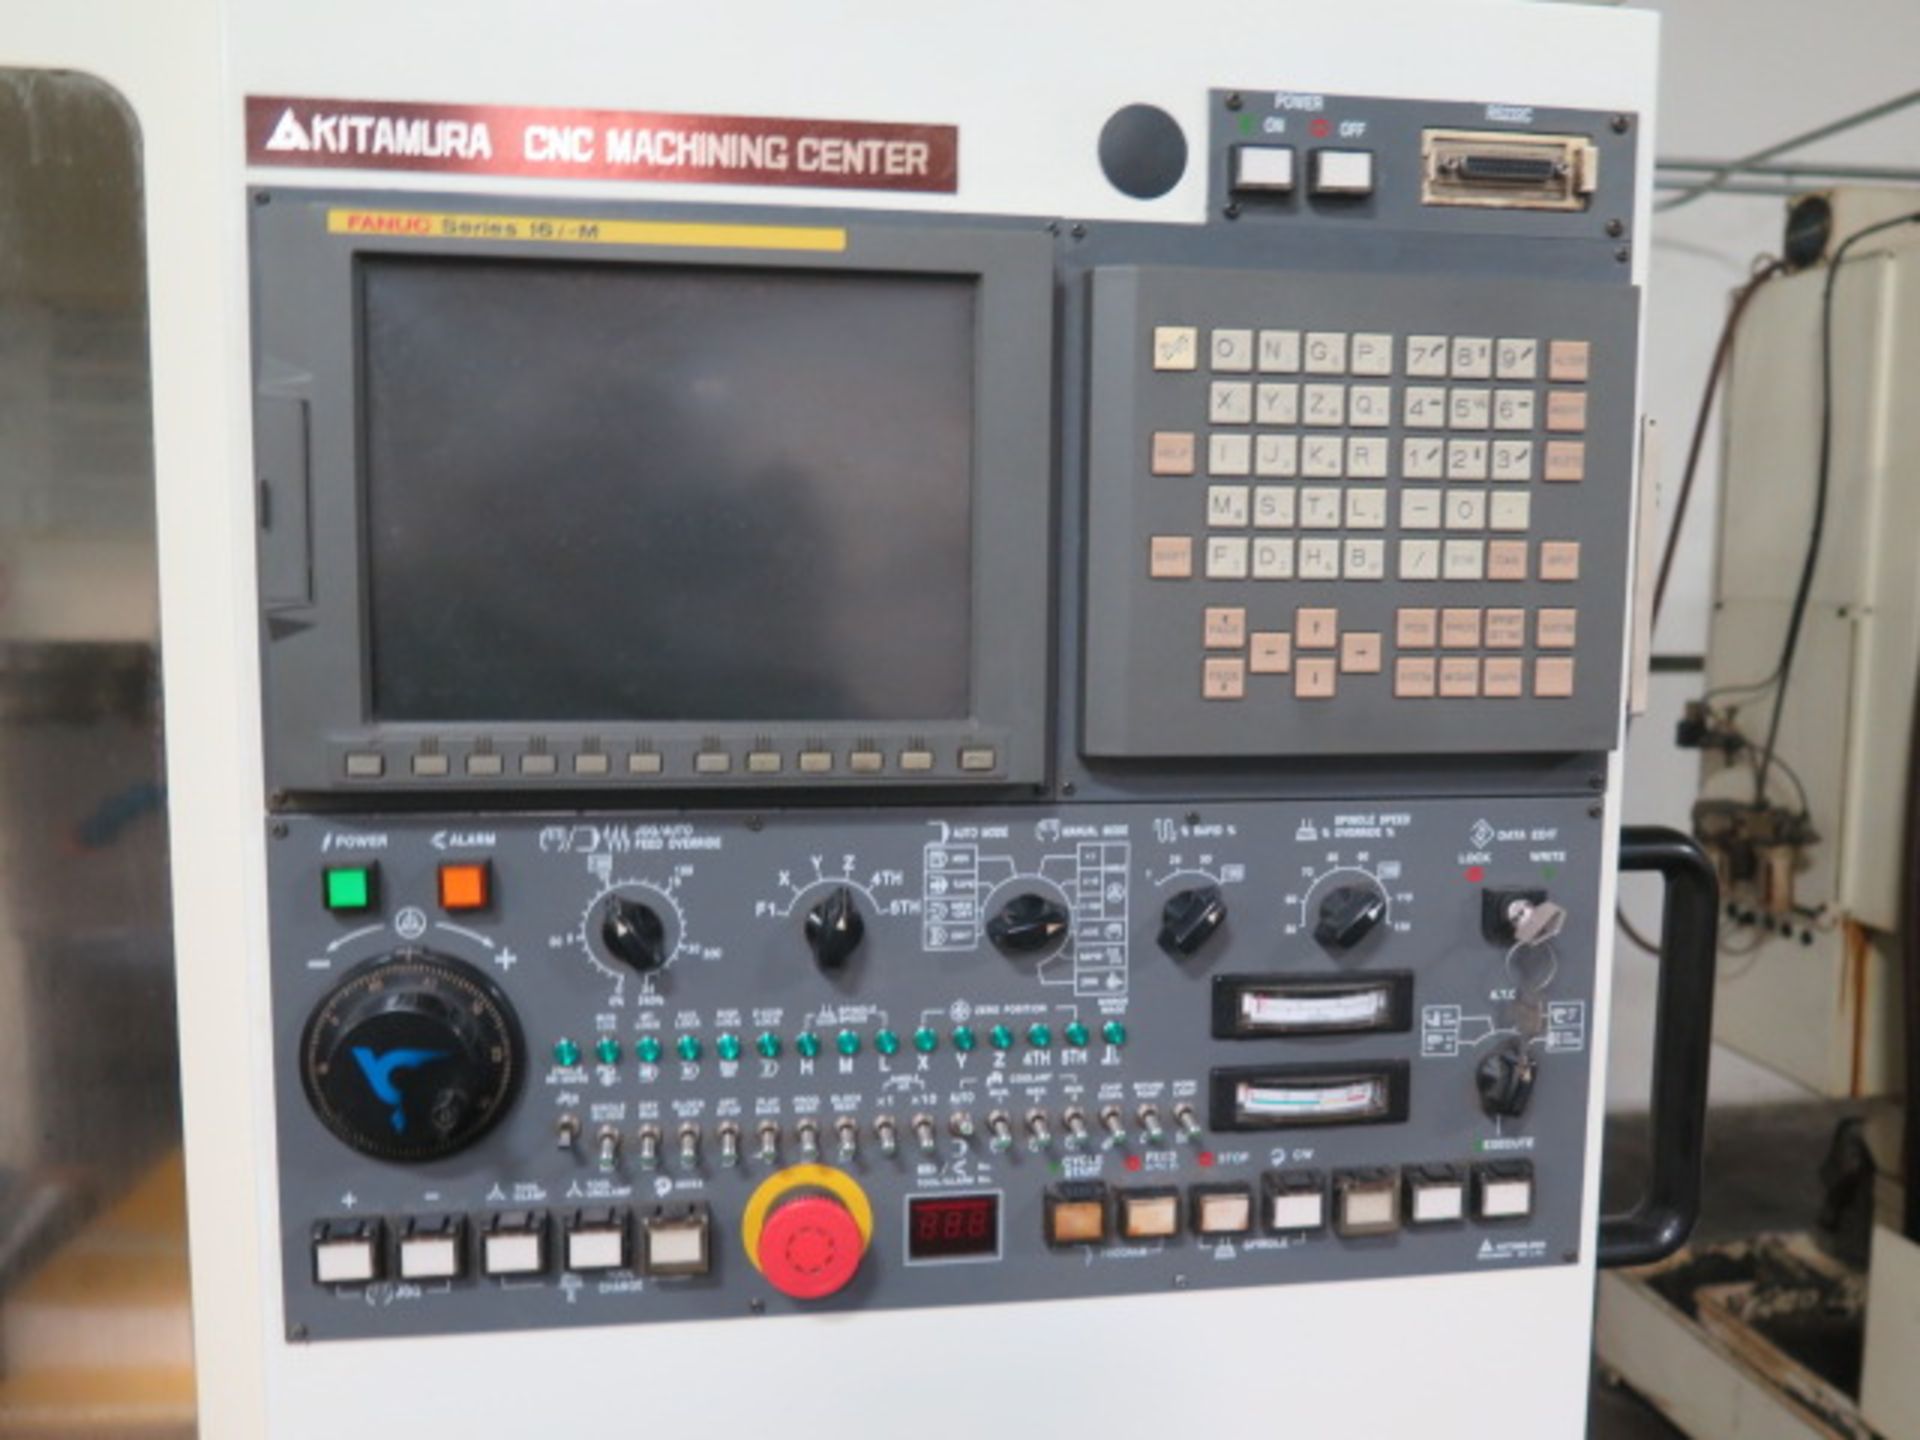 1999 Kitamura Mycenter-2Xi CNC VMC s/n 07185 w/ Fanuc Series 16i-M Controls, SOLD AS IS - Image 7 of 22